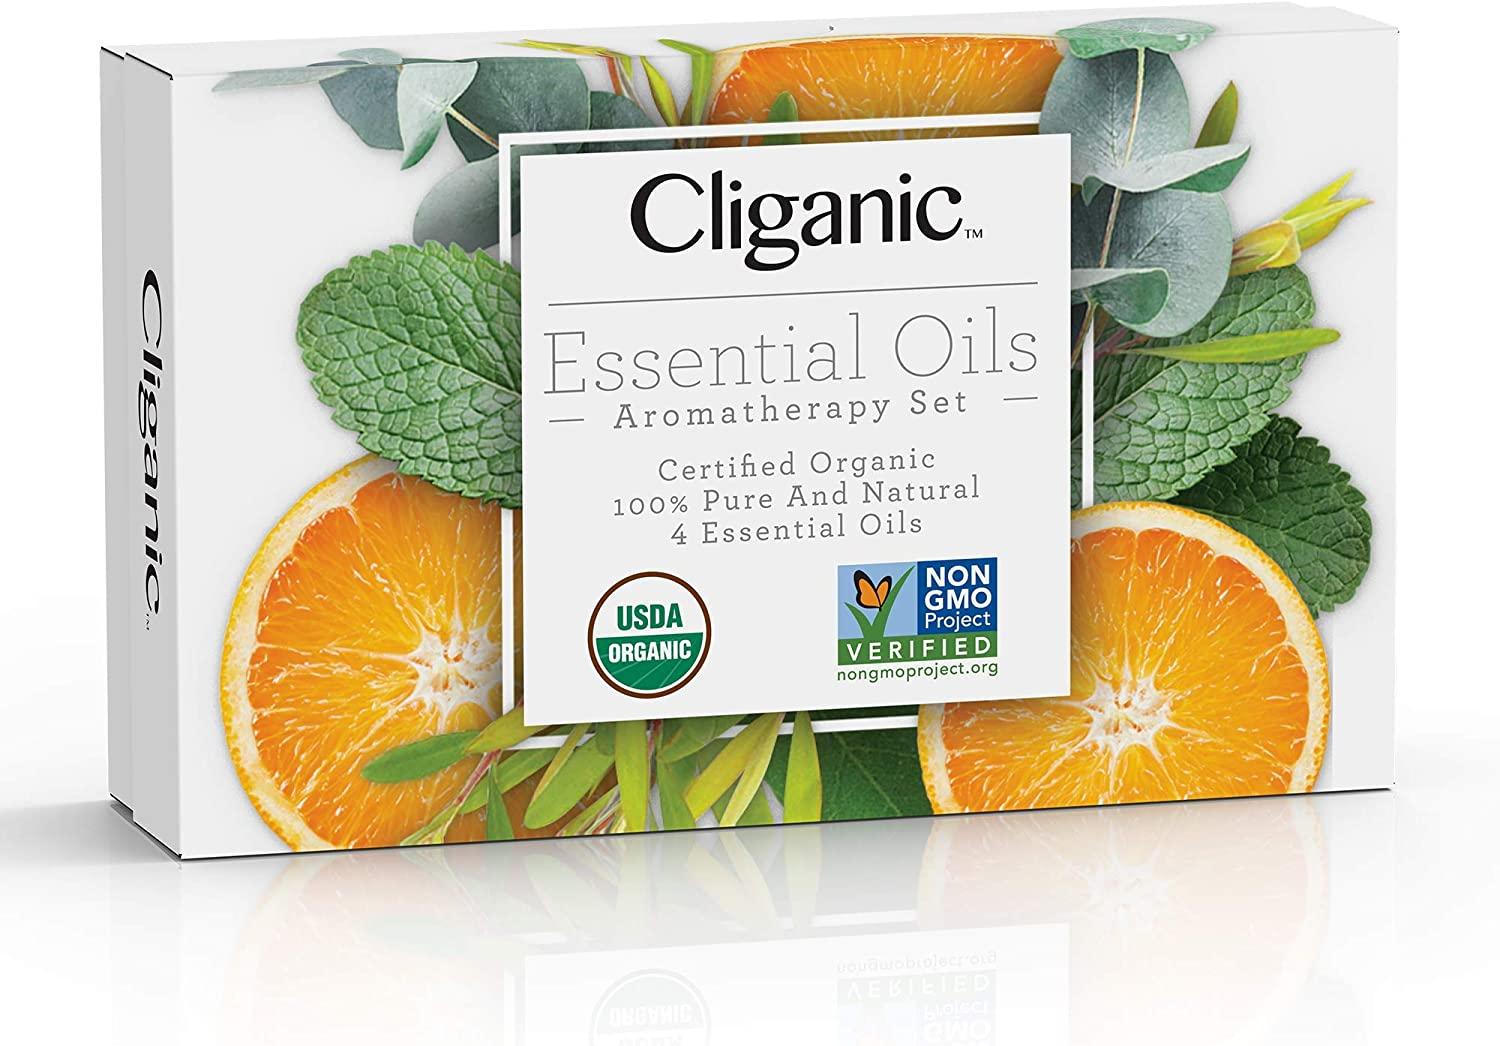 Cliganic, 100% Pure Essential Oil, Lavender Oil